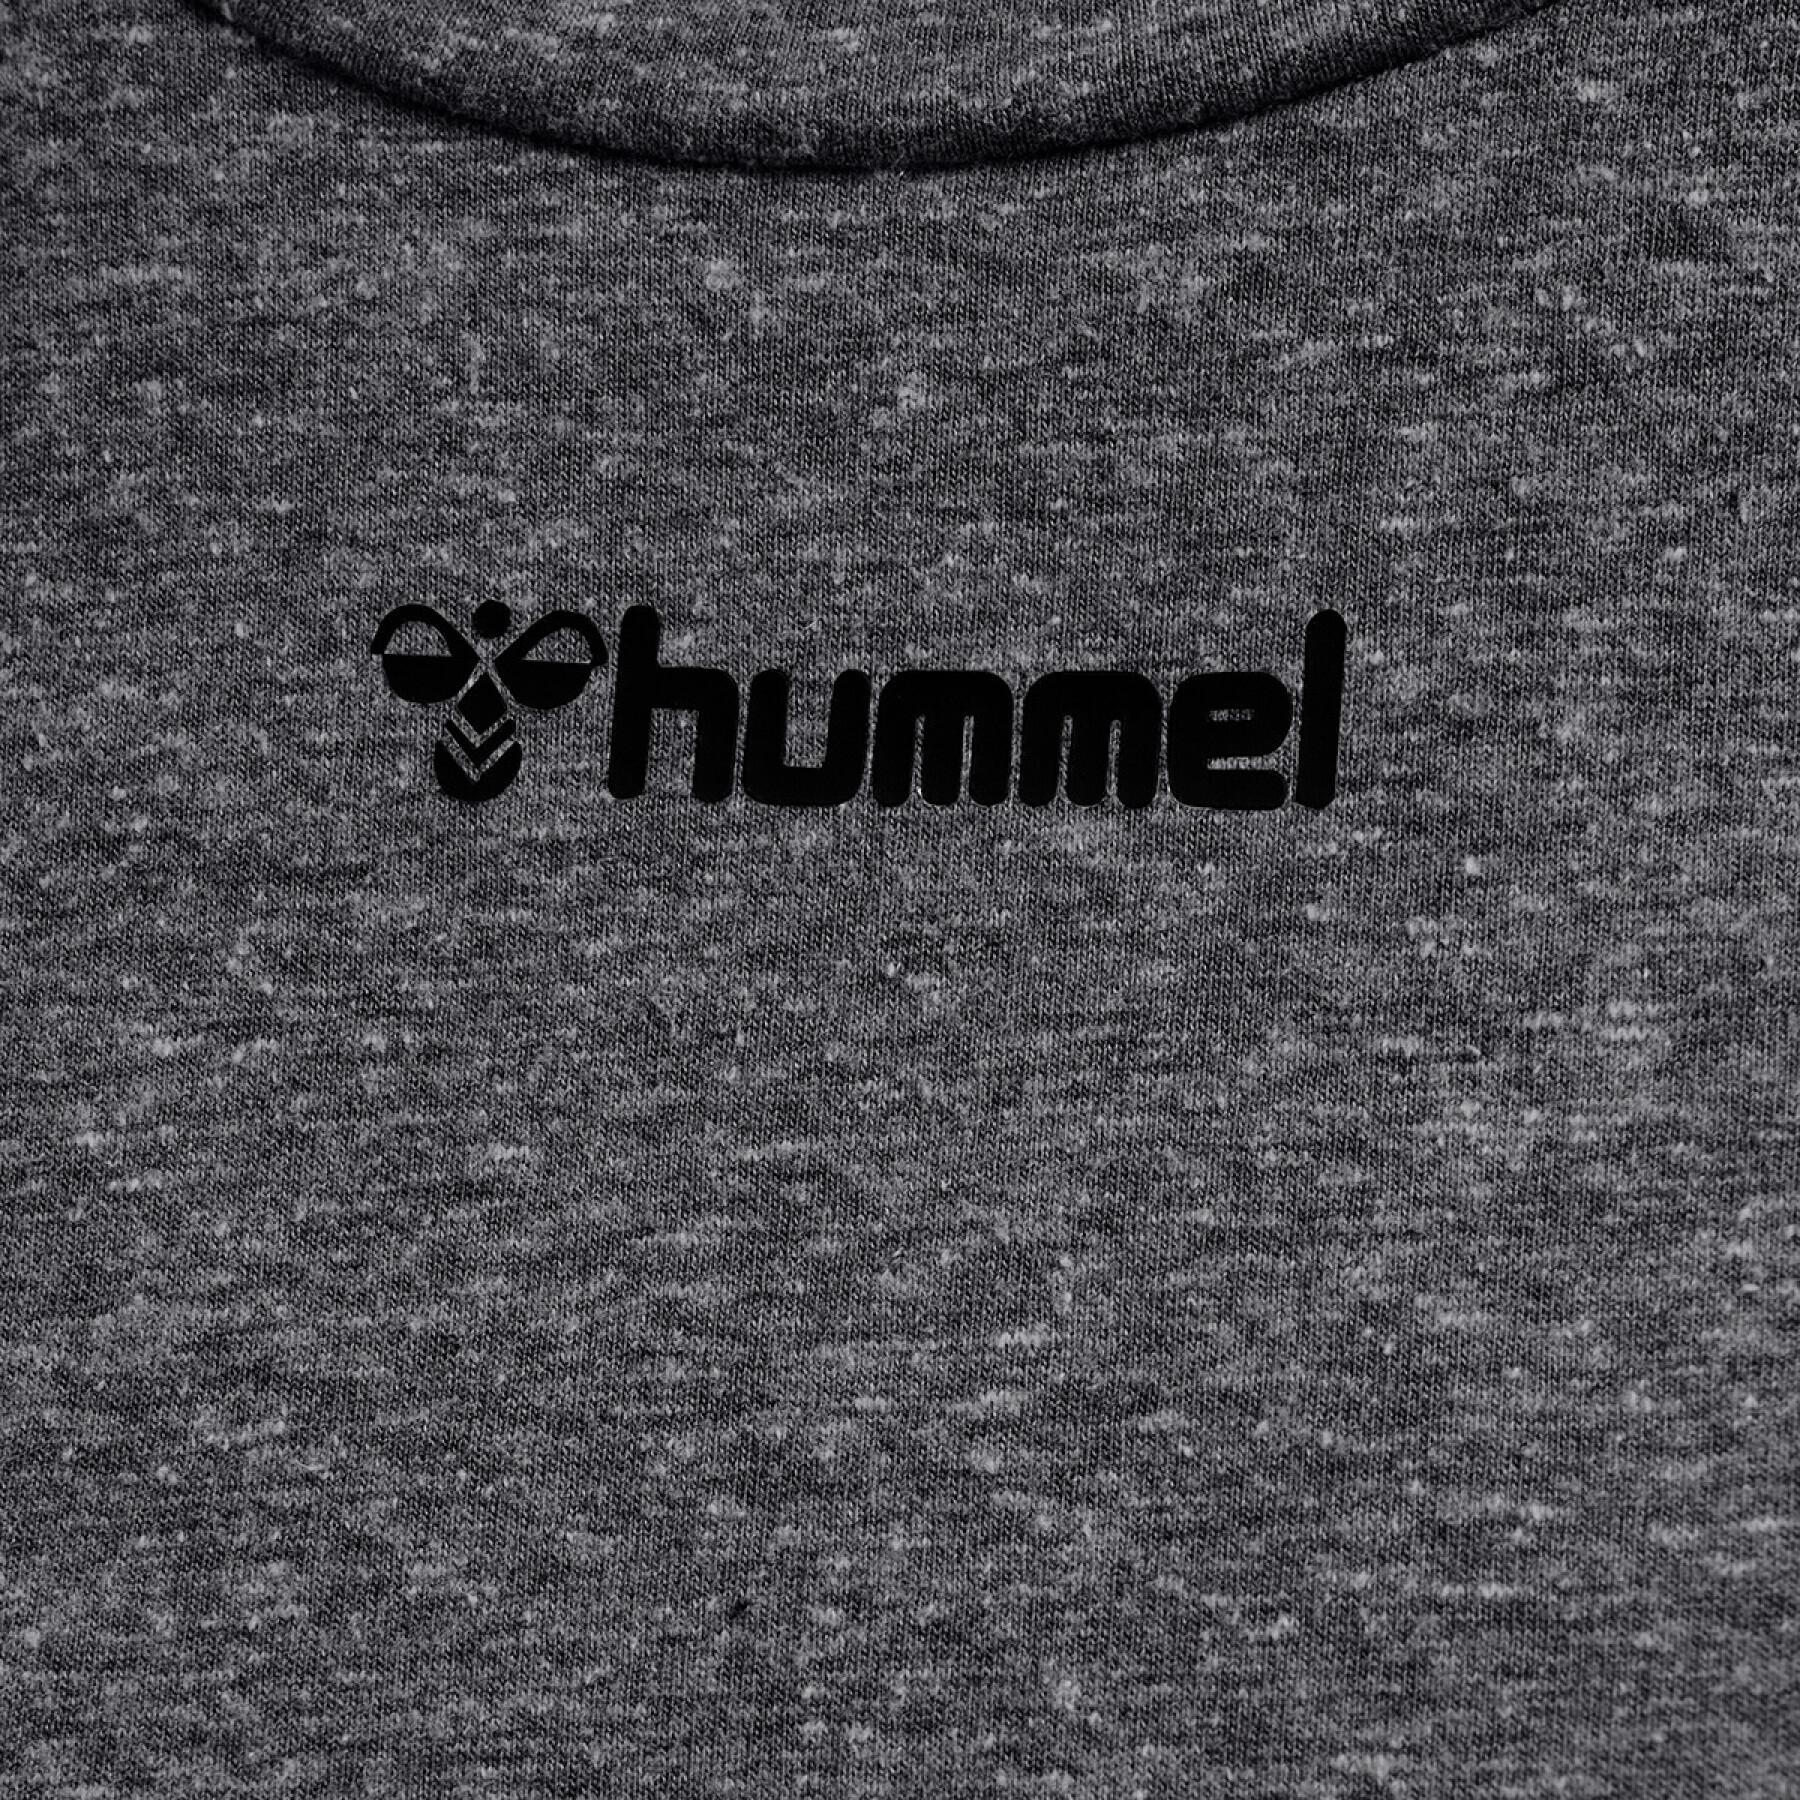 Koszulka damska Hummel hmlzandra